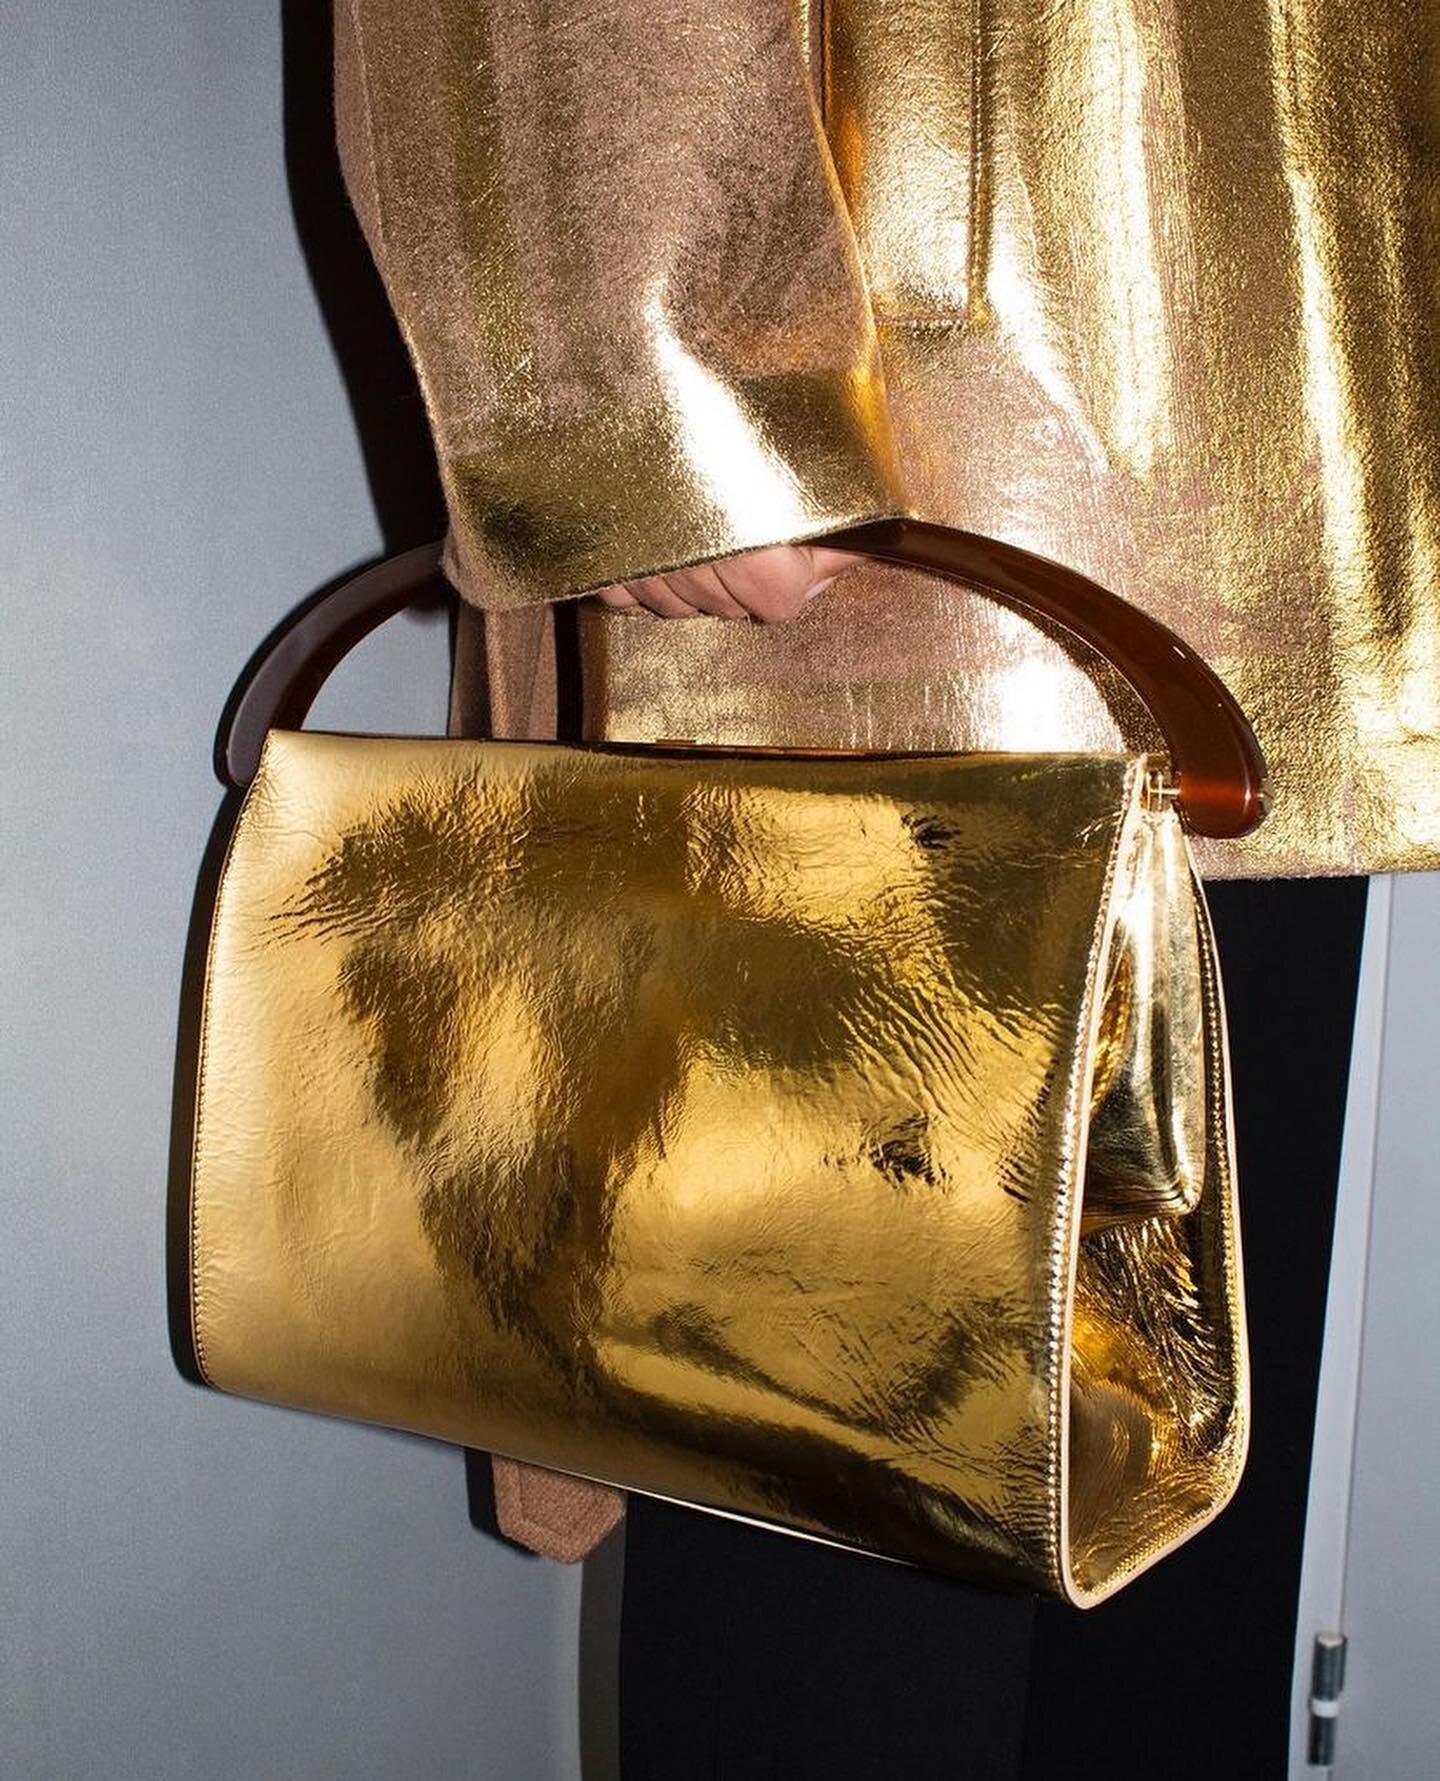 Gold heavenly details by @driesvannoten 

#gold #fashion #driesforever